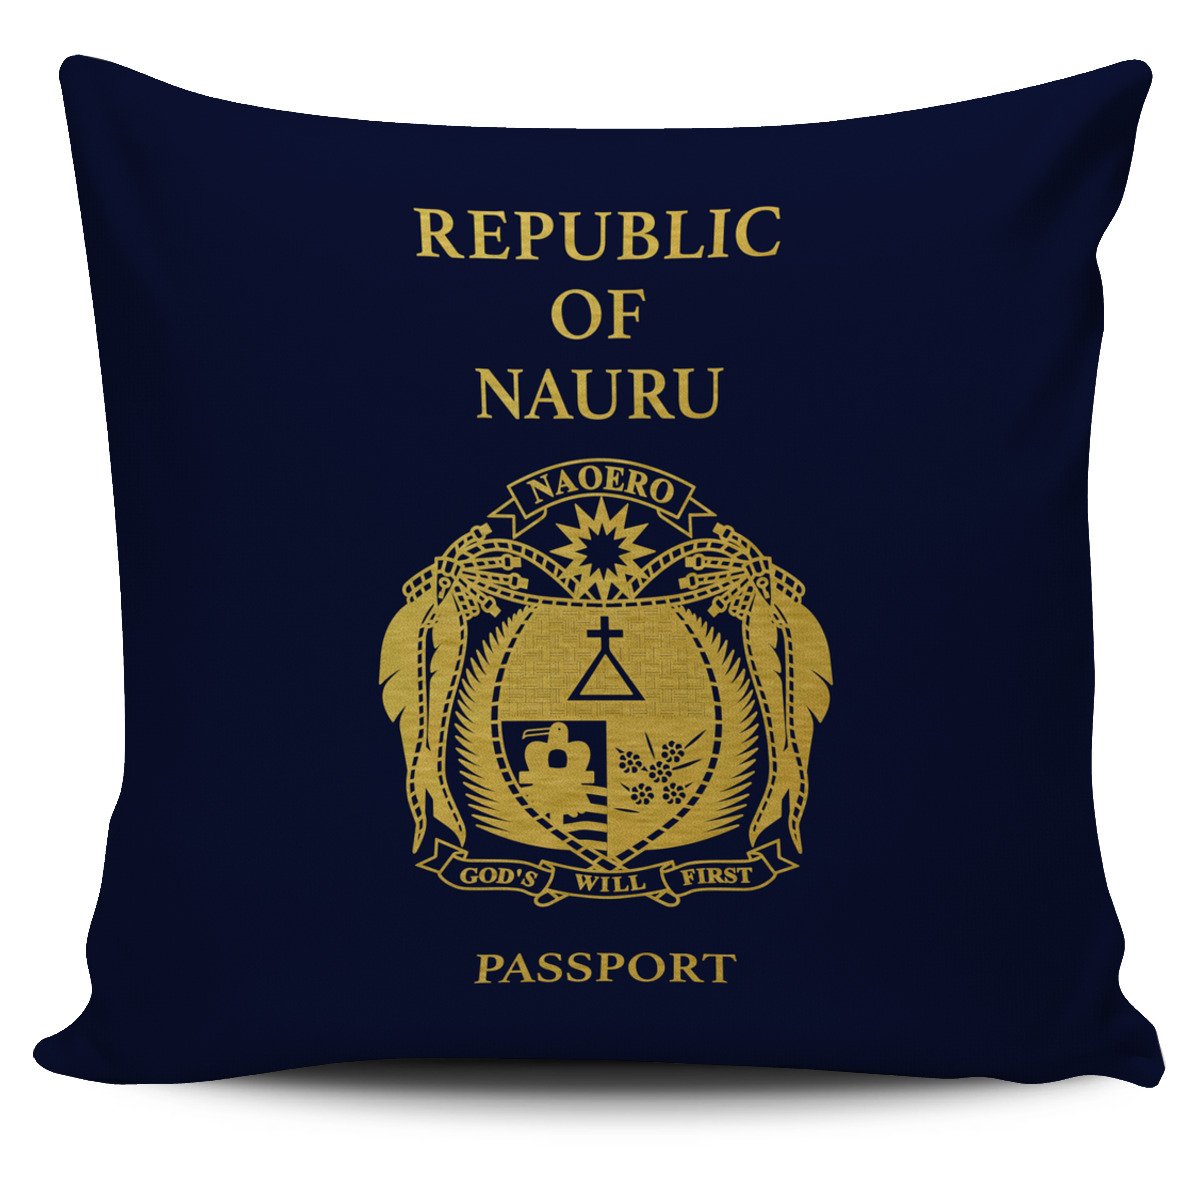 Nauru Pillow Cover - Passport Version Nauru One Size Blue - Polynesian Pride